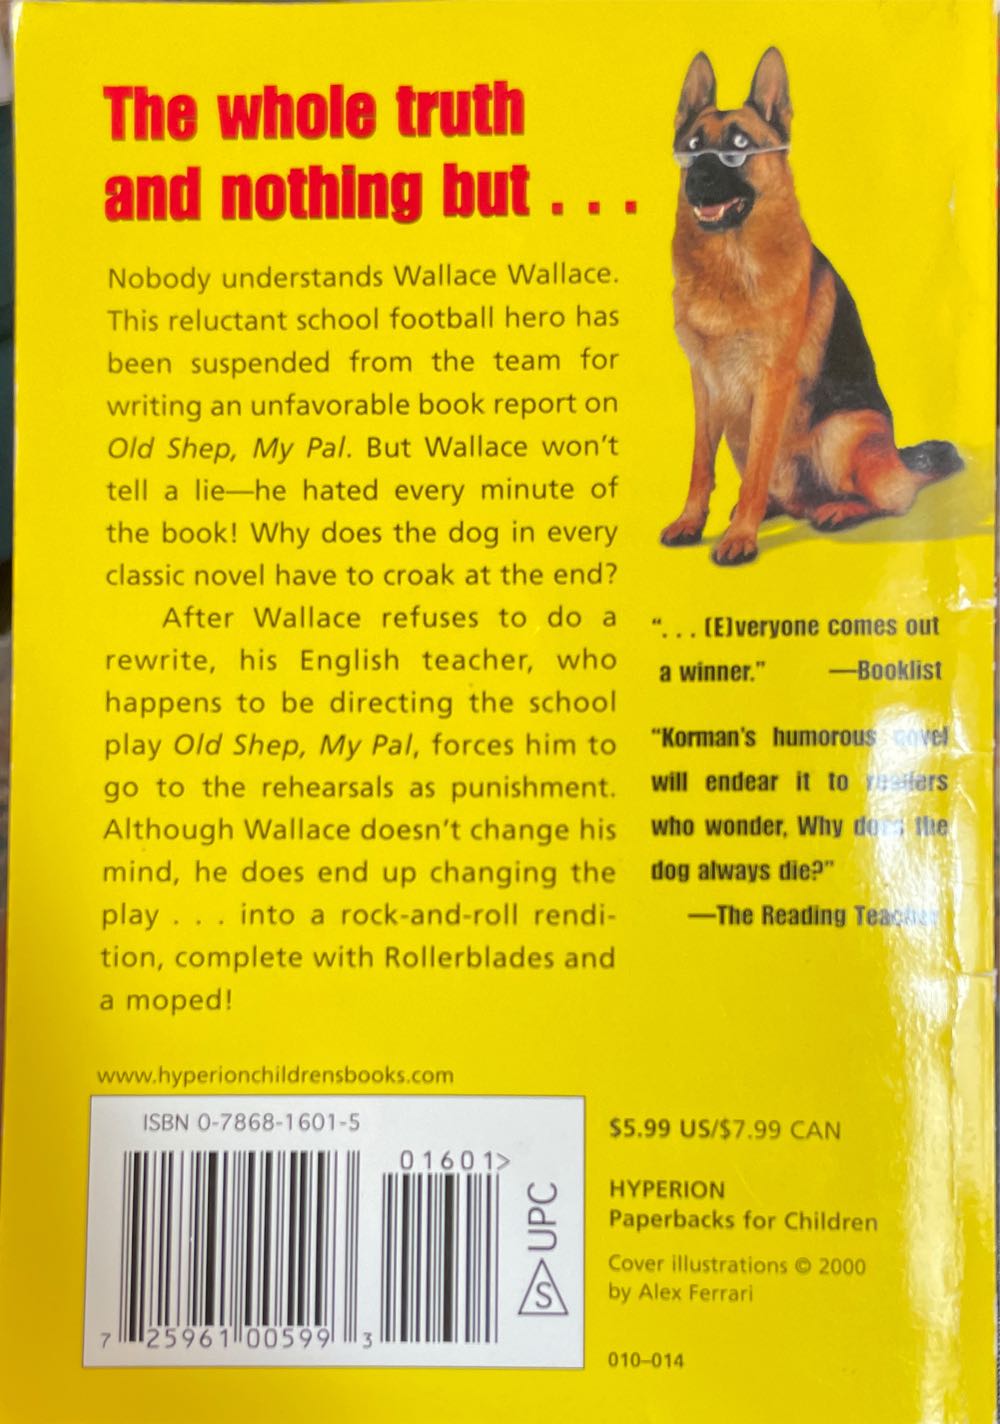 No More Dead Dogs - Korman, Gordan (Hyperion - Paperback) book collectible [Barcode 9780786816019] - Main Image 2